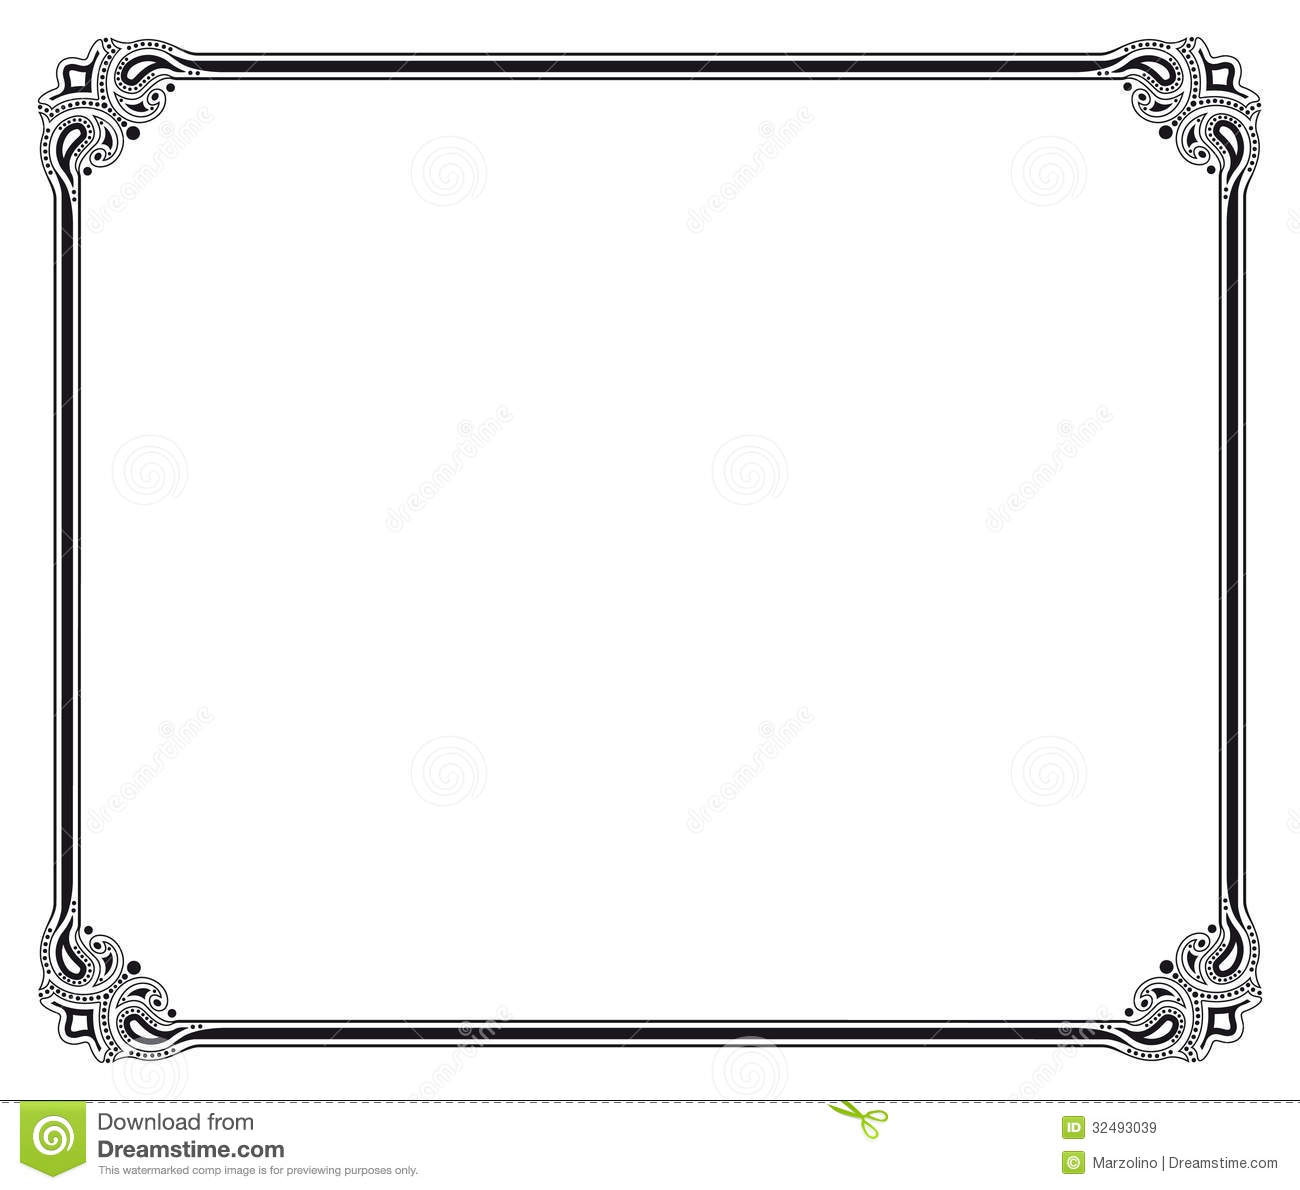 Black and White Decorative Frame